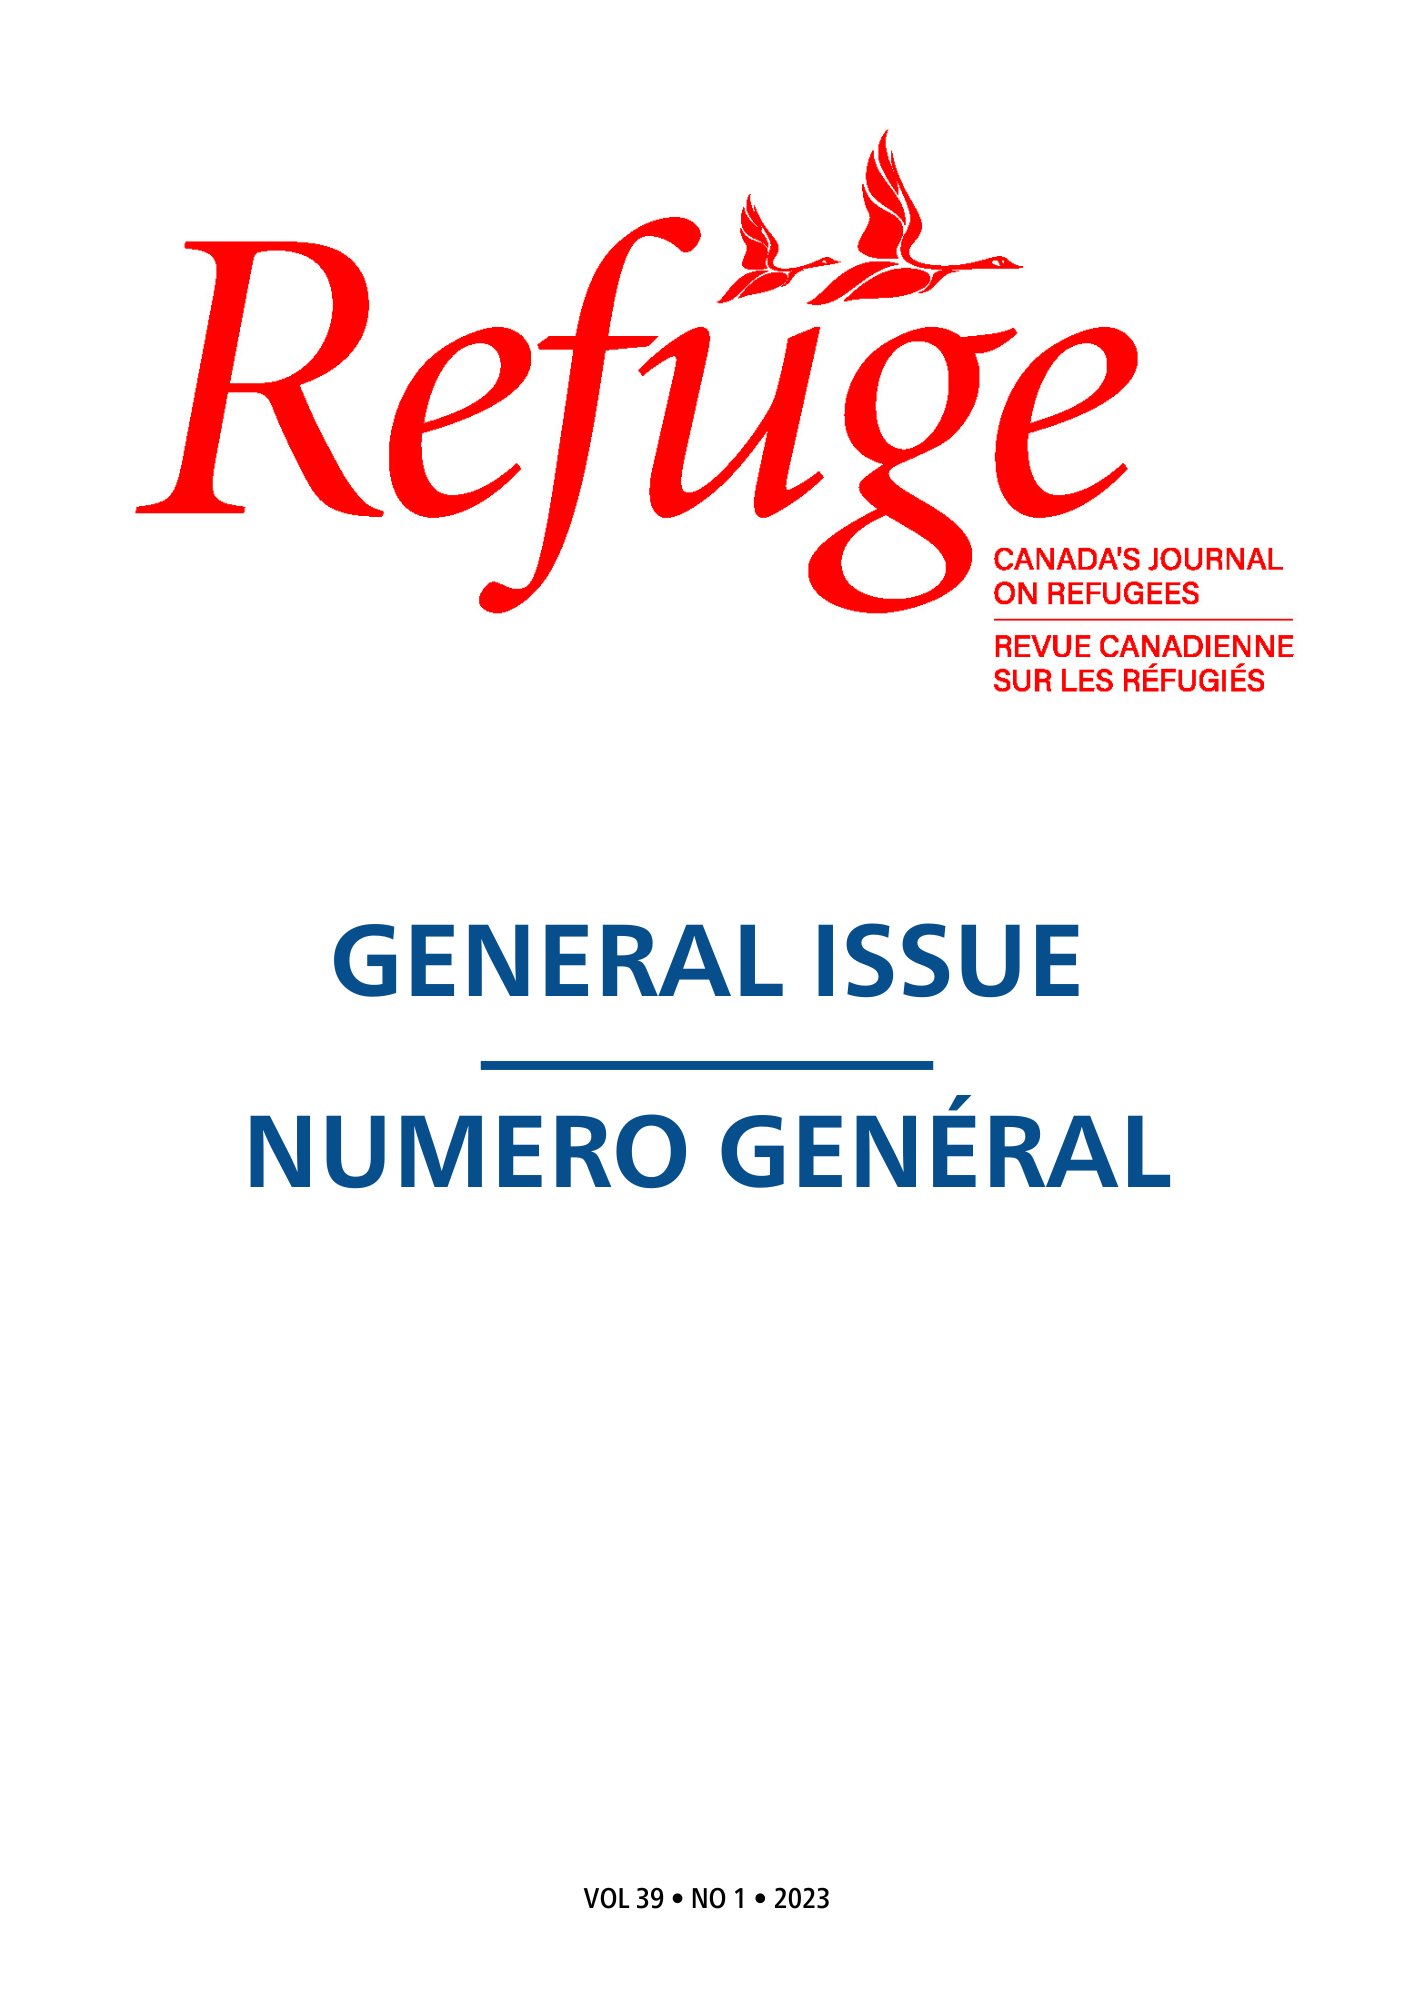 cover for Refuge volume 39 issue 1 2023